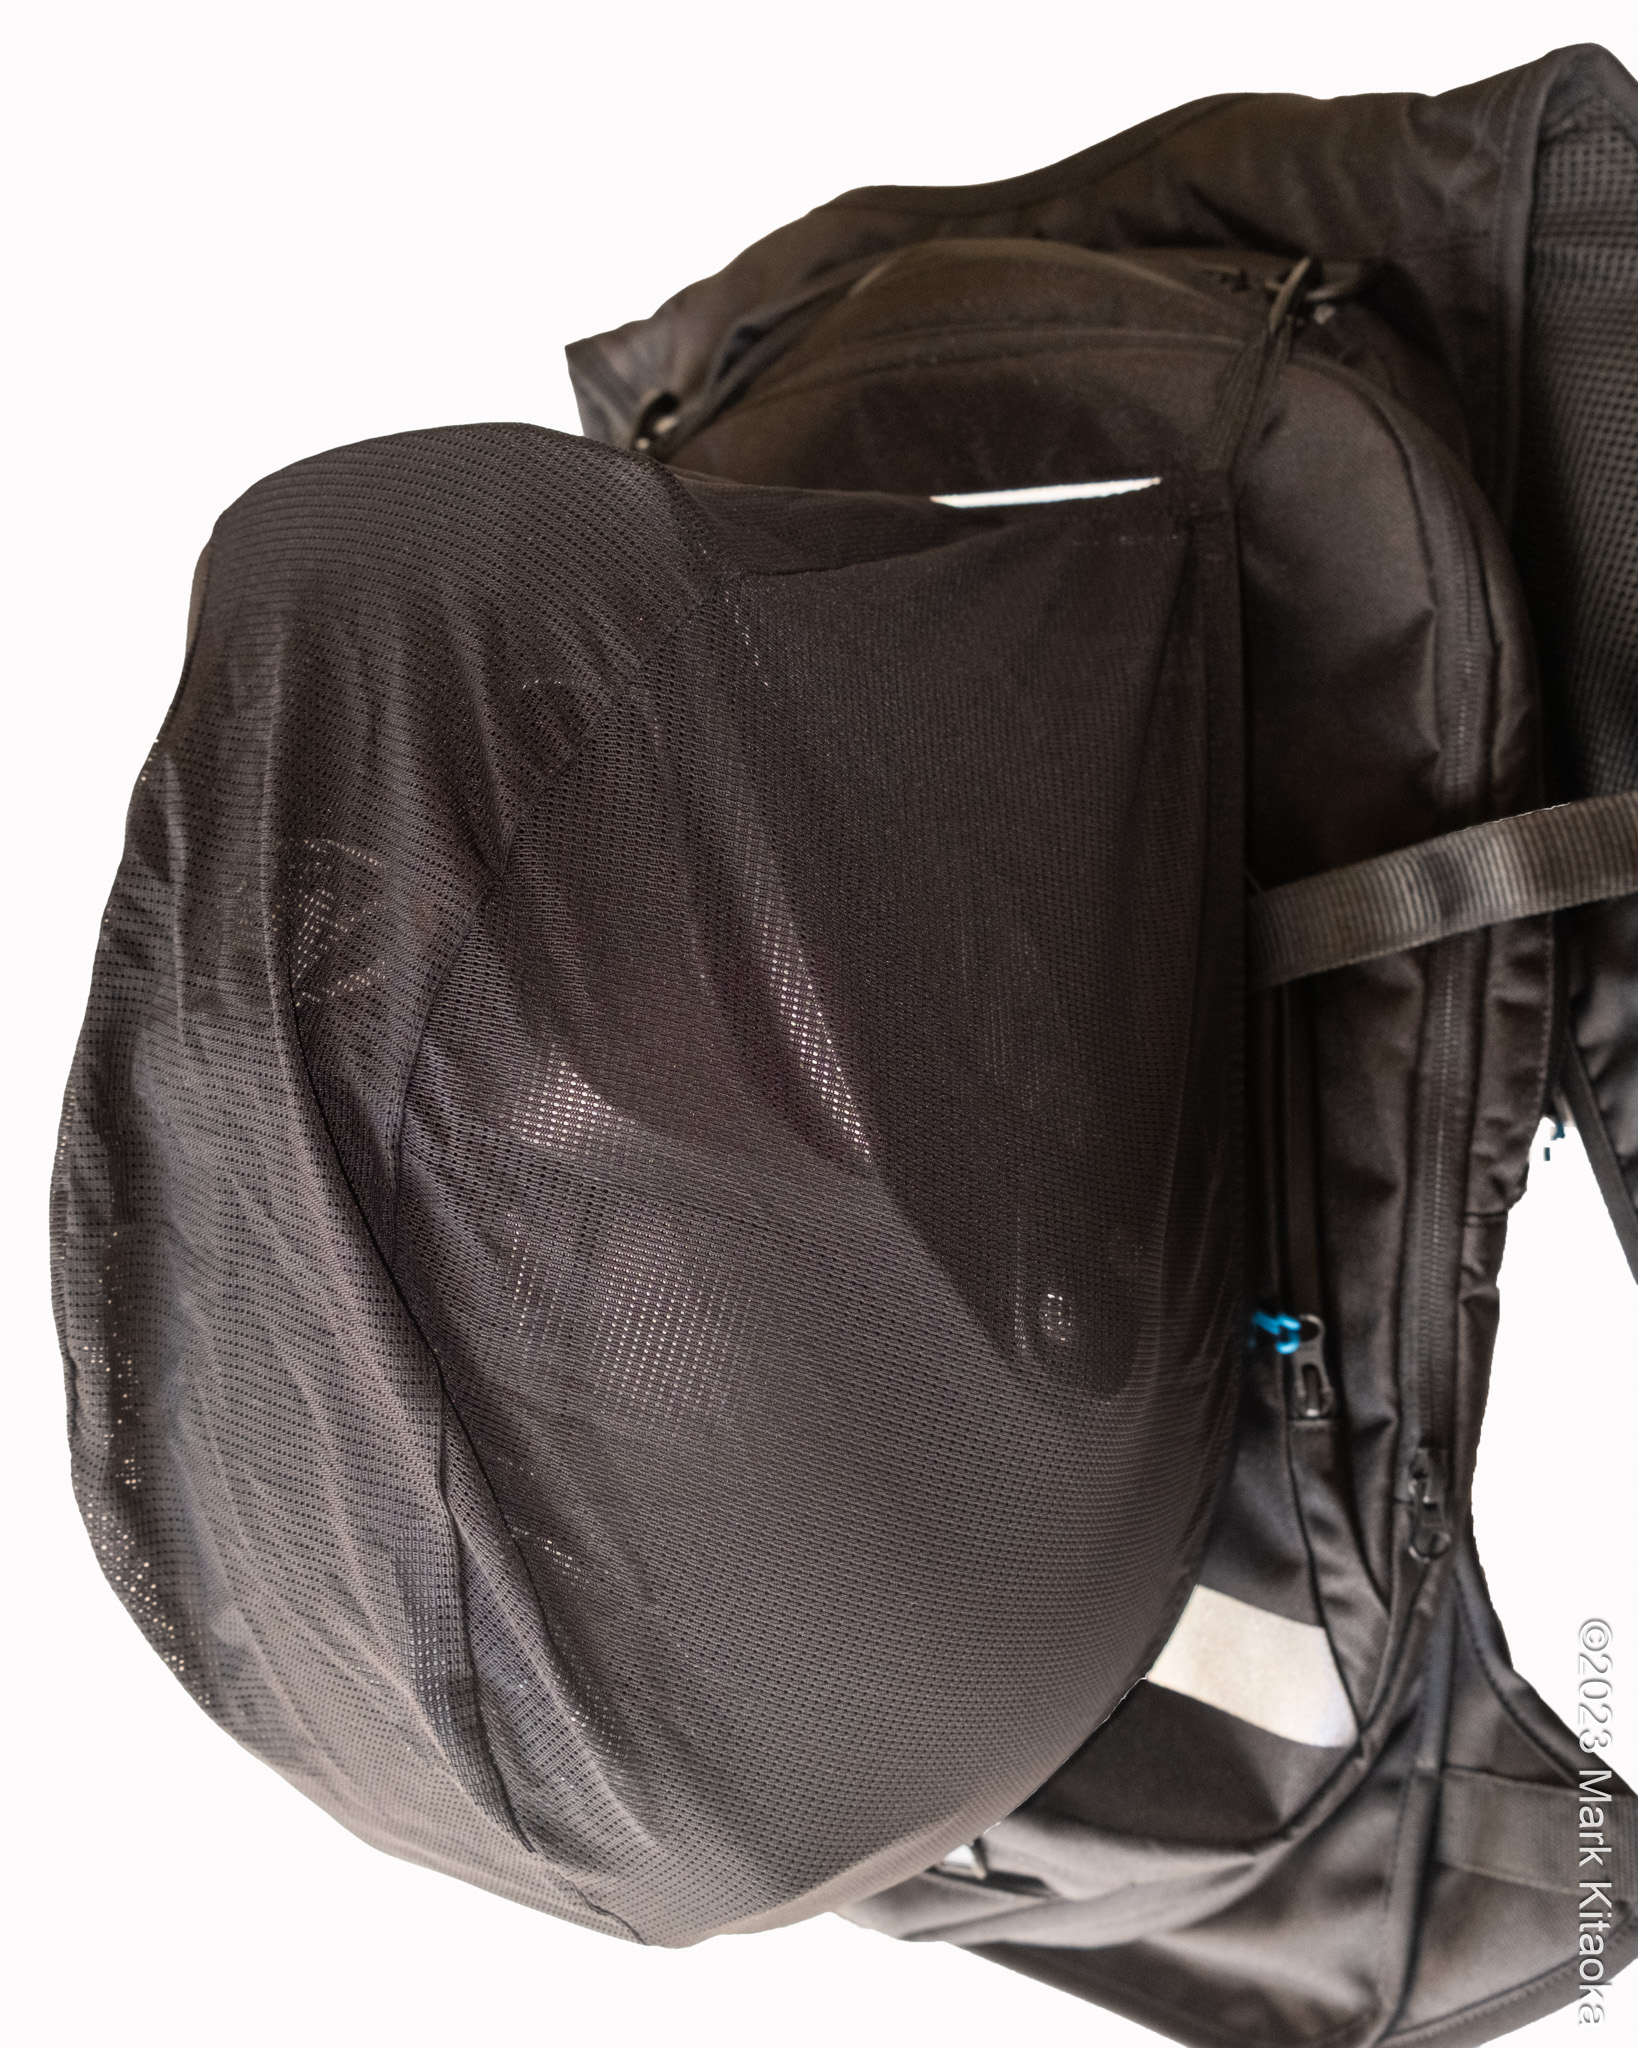 Helmet holder on H-MOOV airbag backpack